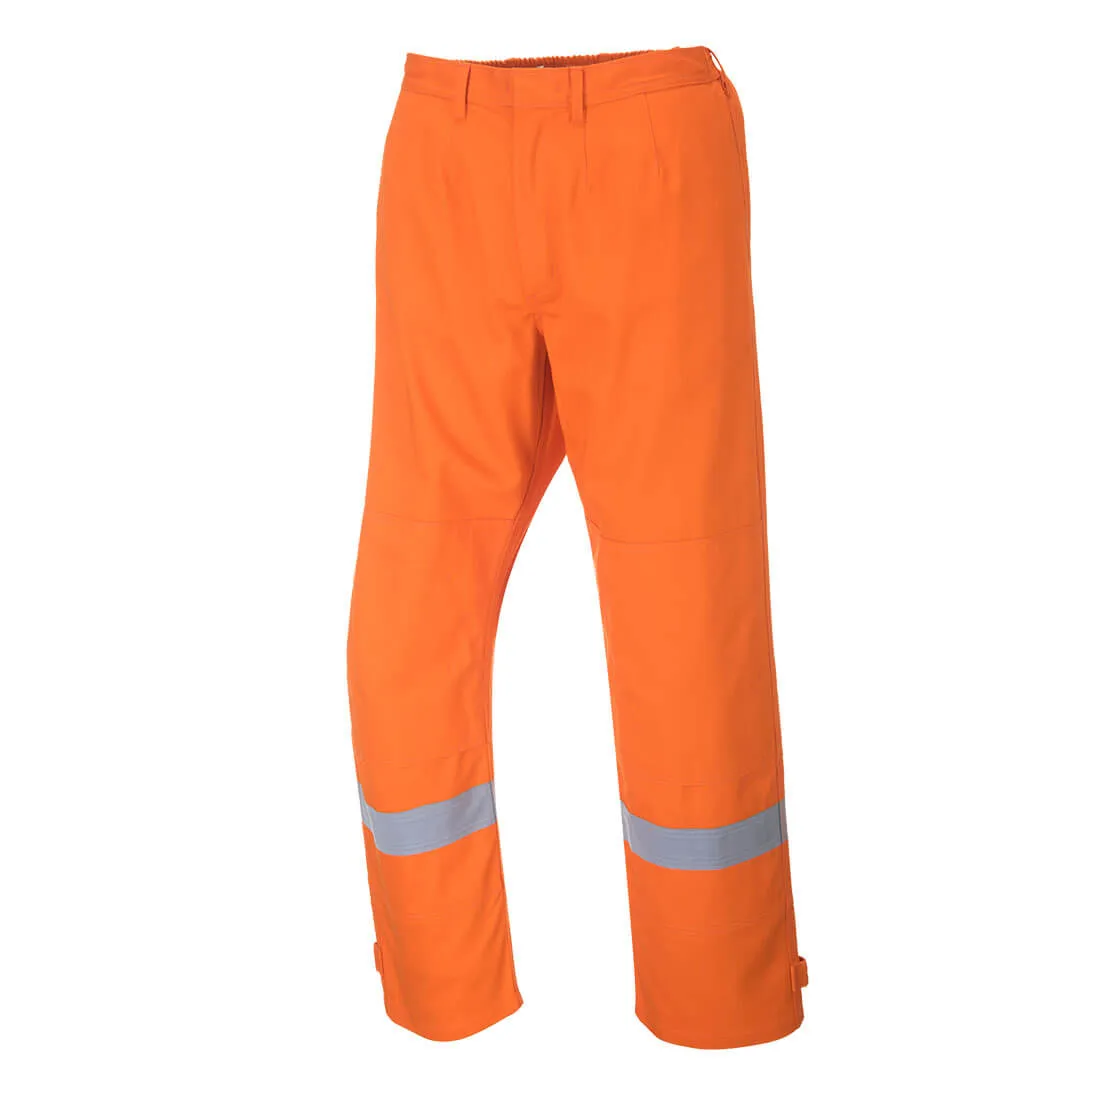 Biz Flame Plus Mens Flame Resistant Trousers - Orange, 2XL, 32"